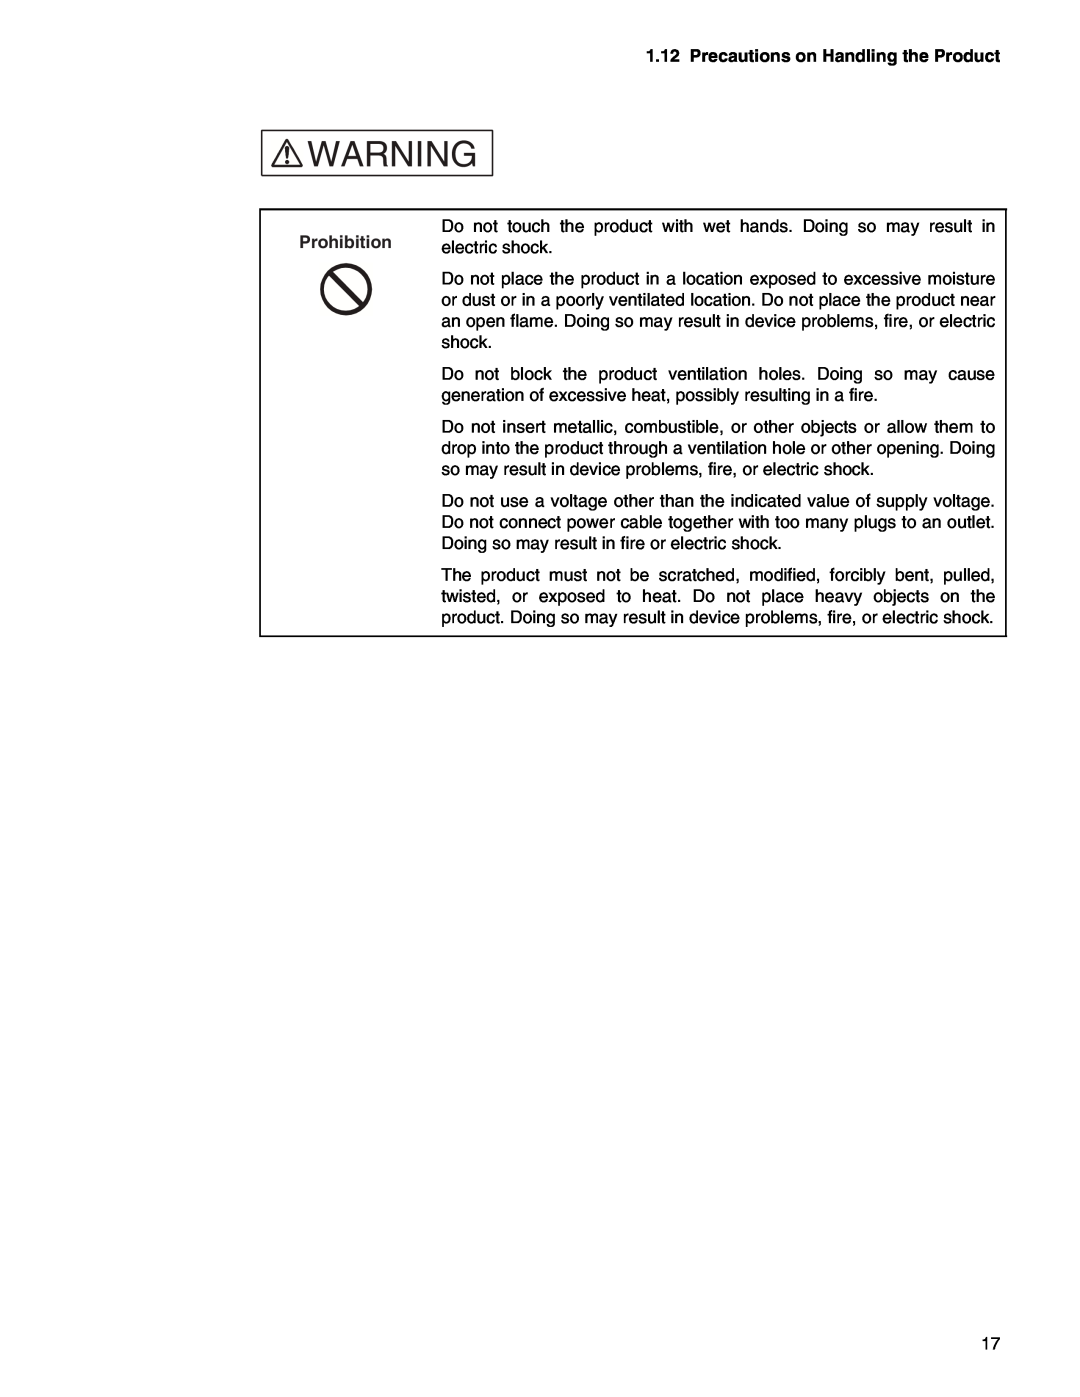 Fujitsu MB2147-01 manual Precautions on Handling the Product, Prohibition 